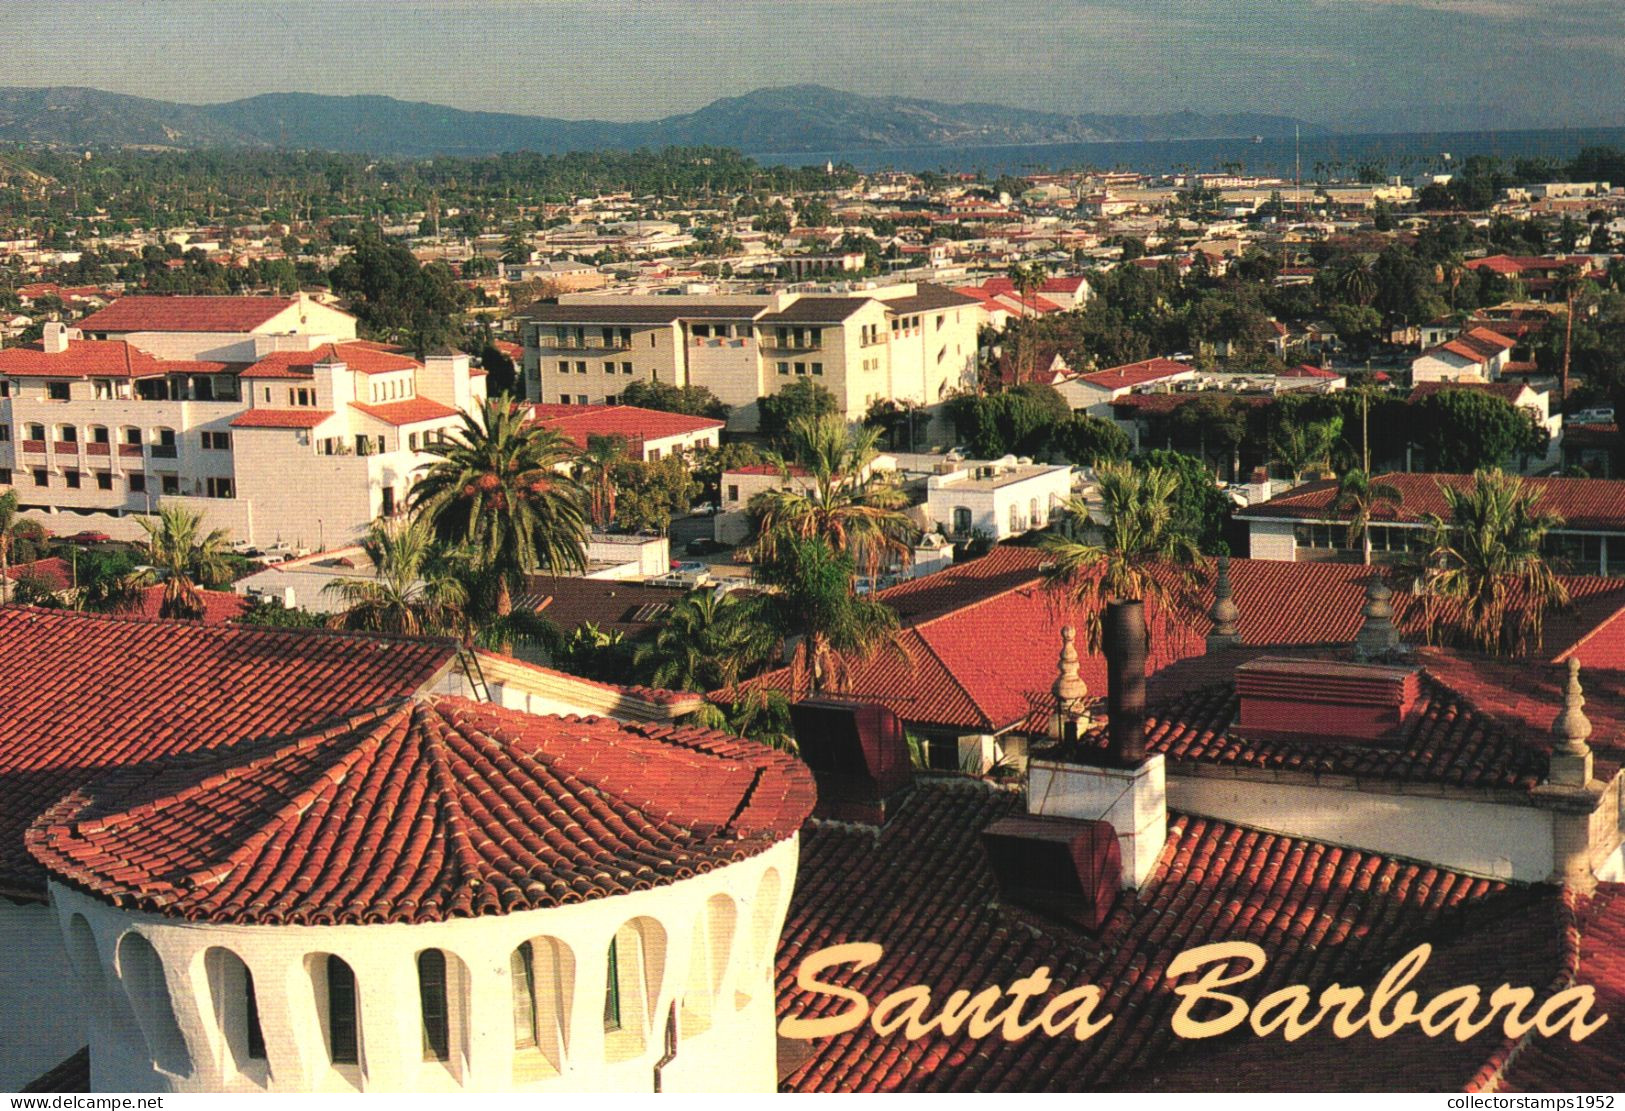 SANTA BARBARA, CALIFORNIA, ARCHITECTURE, UNITED STATES - Santa Barbara